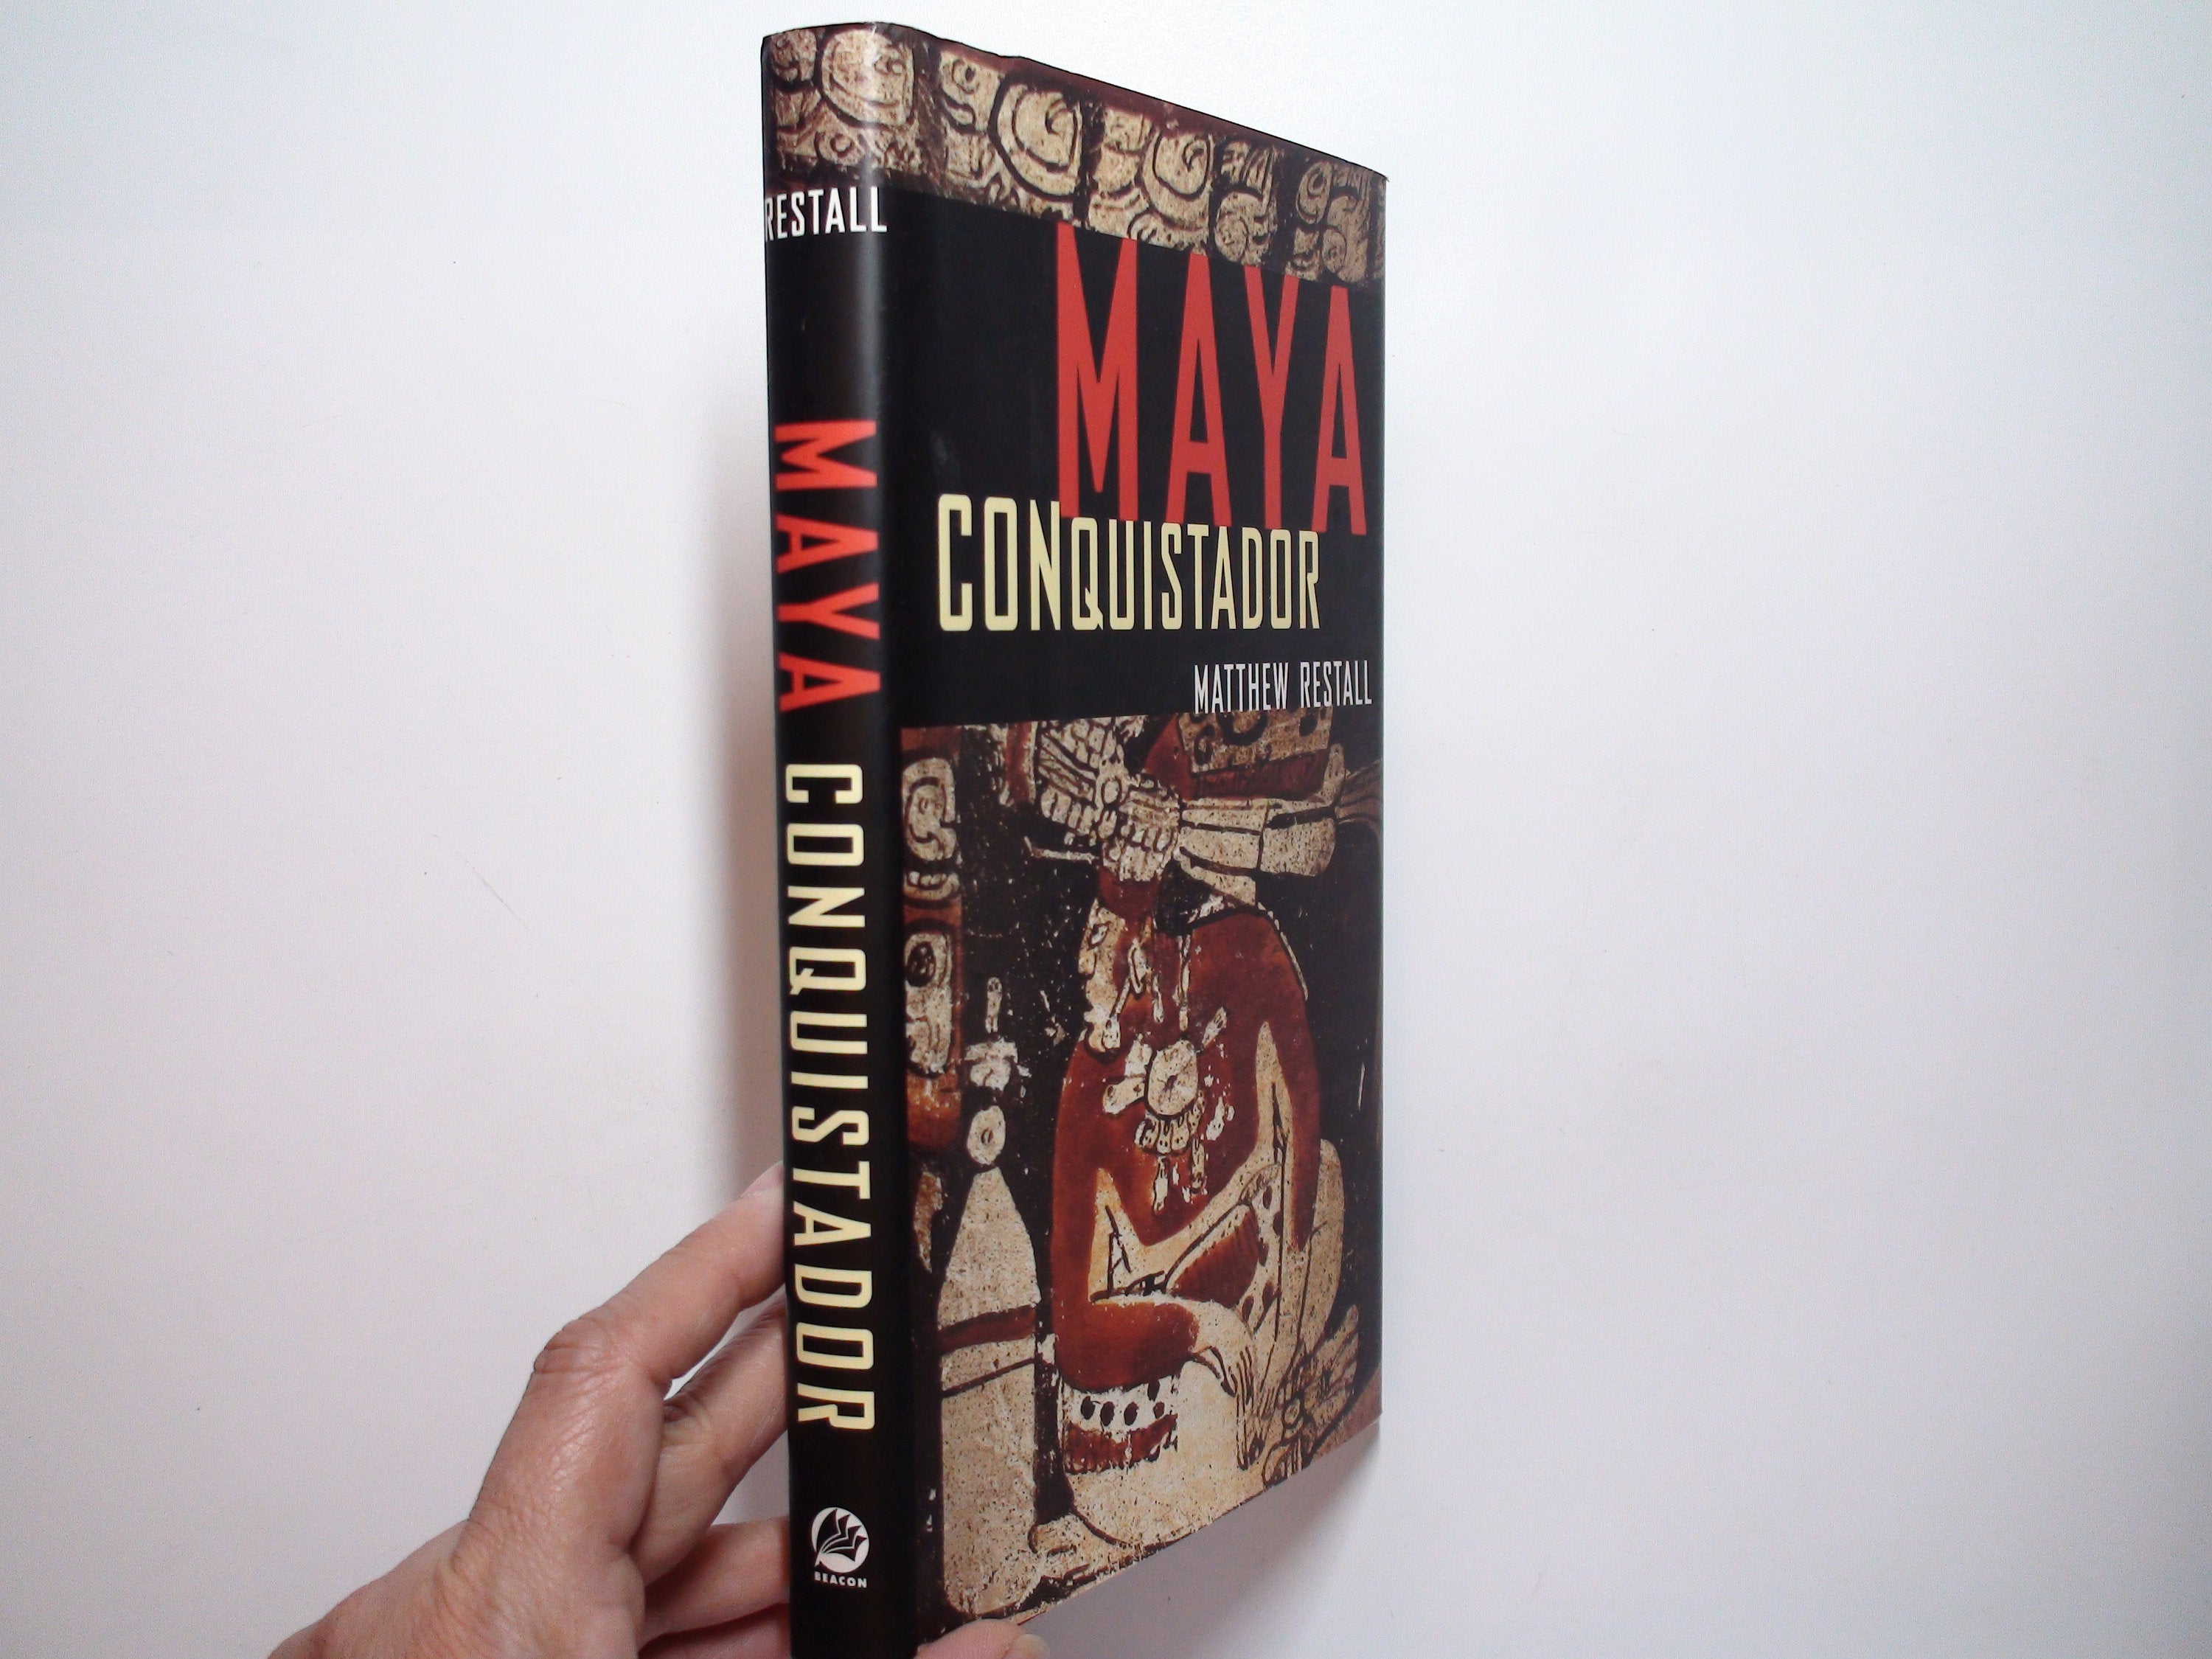 Maya Conquistador by Matthew Restall, Illustrated, 1st Ed, w D/J, 1998